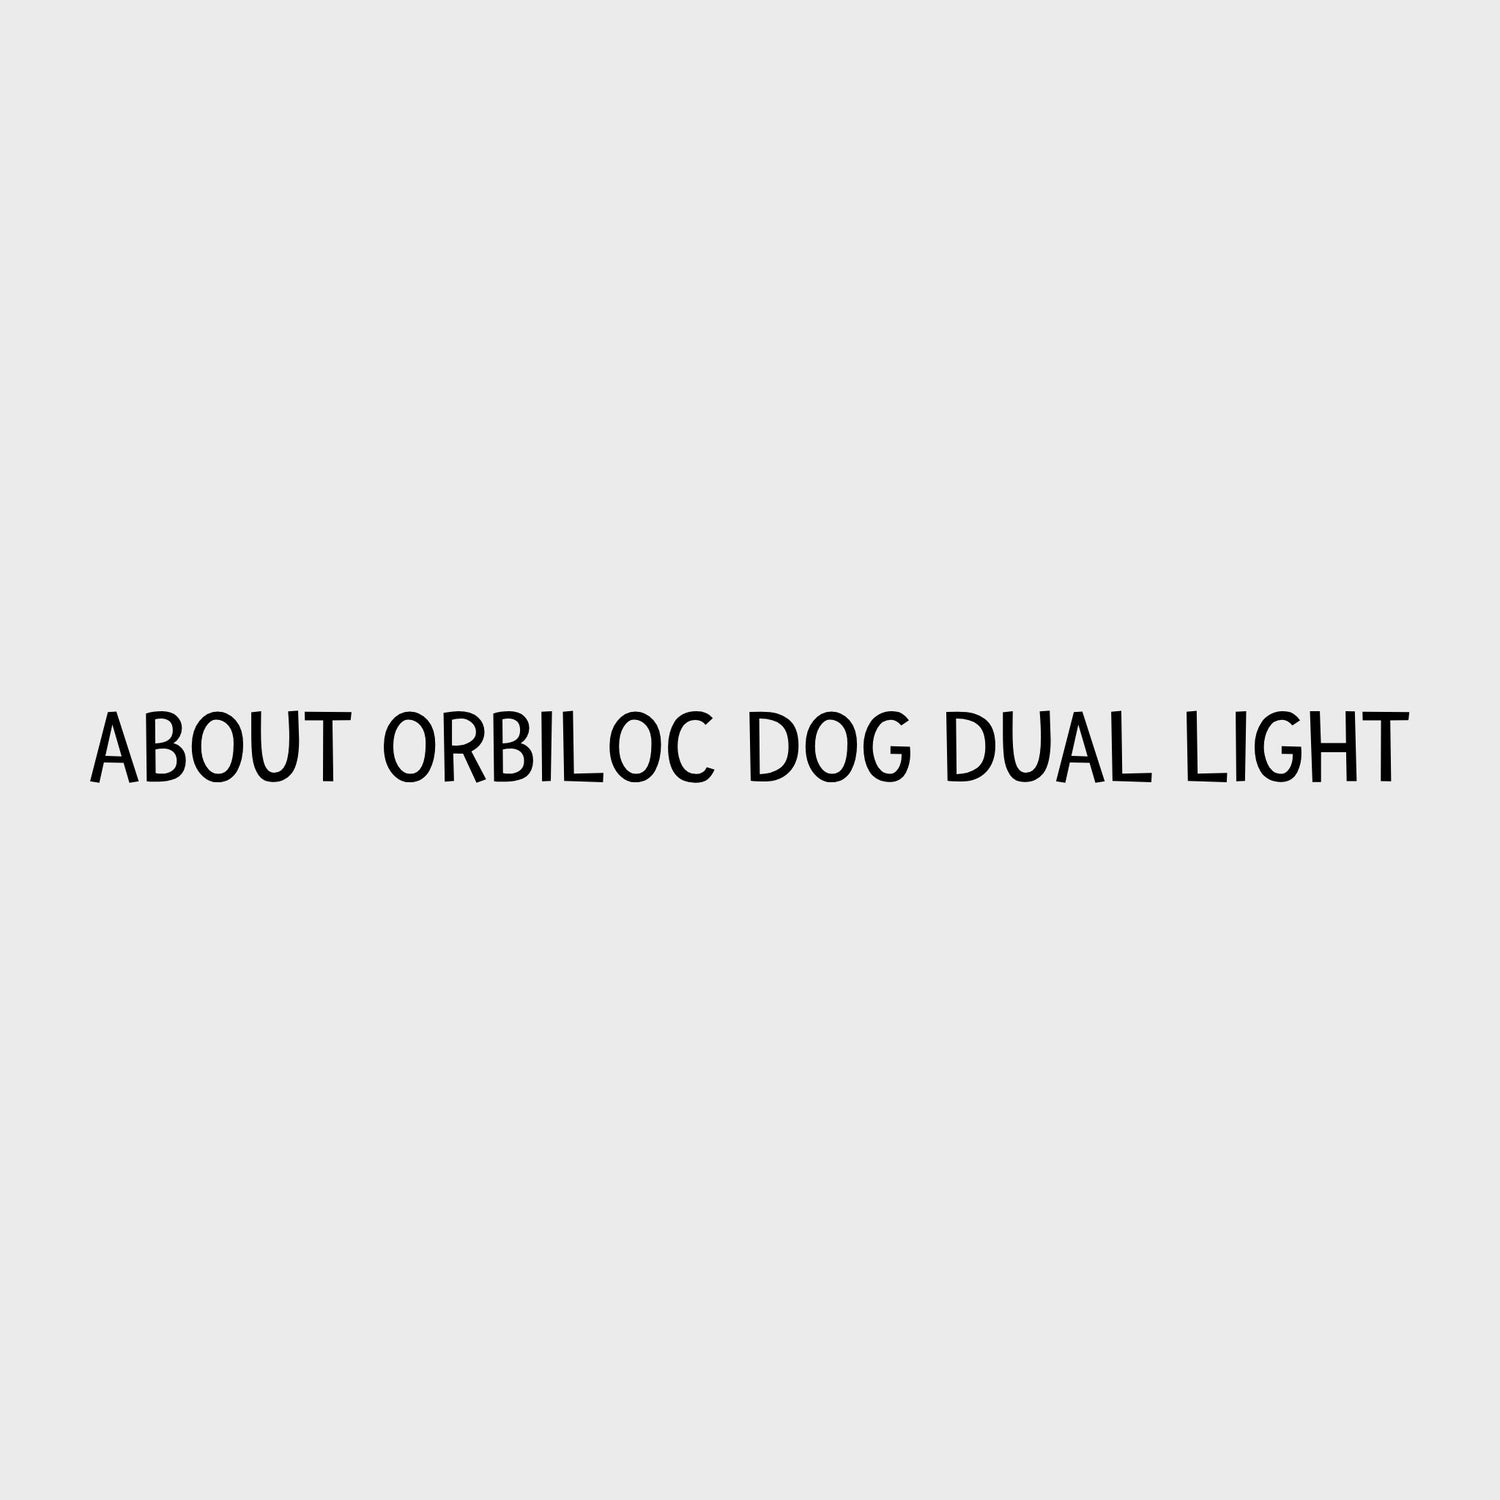 Video - Orbiloc Dog Dual Light